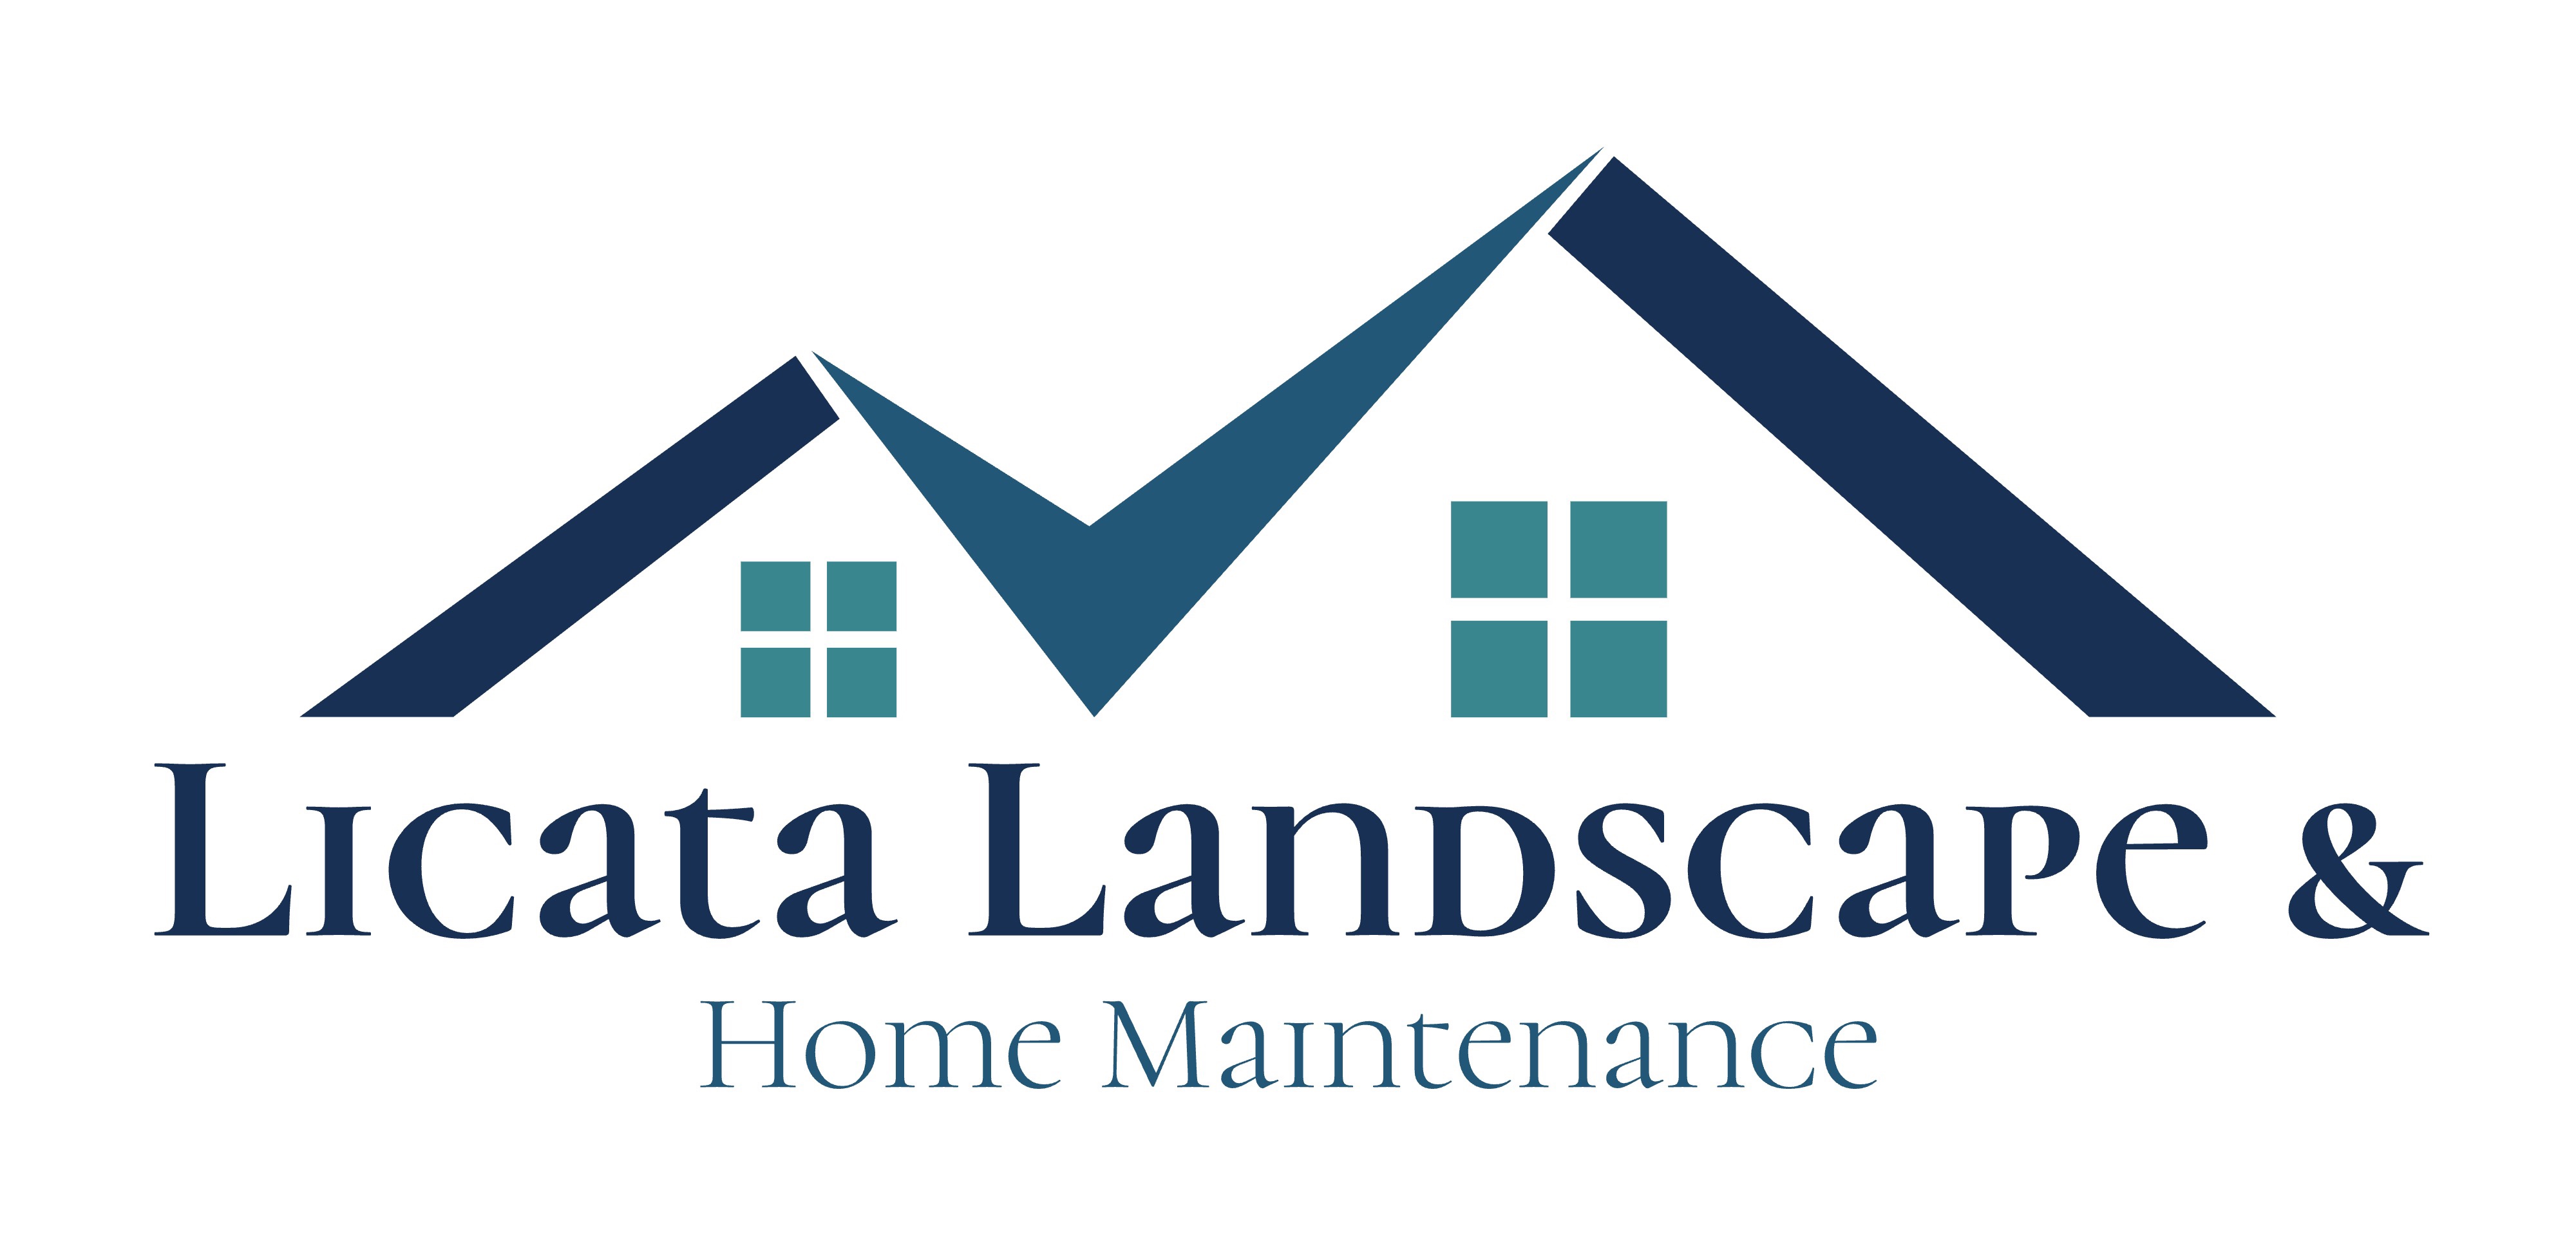 Licata Landscape & Home Maintenance's logo